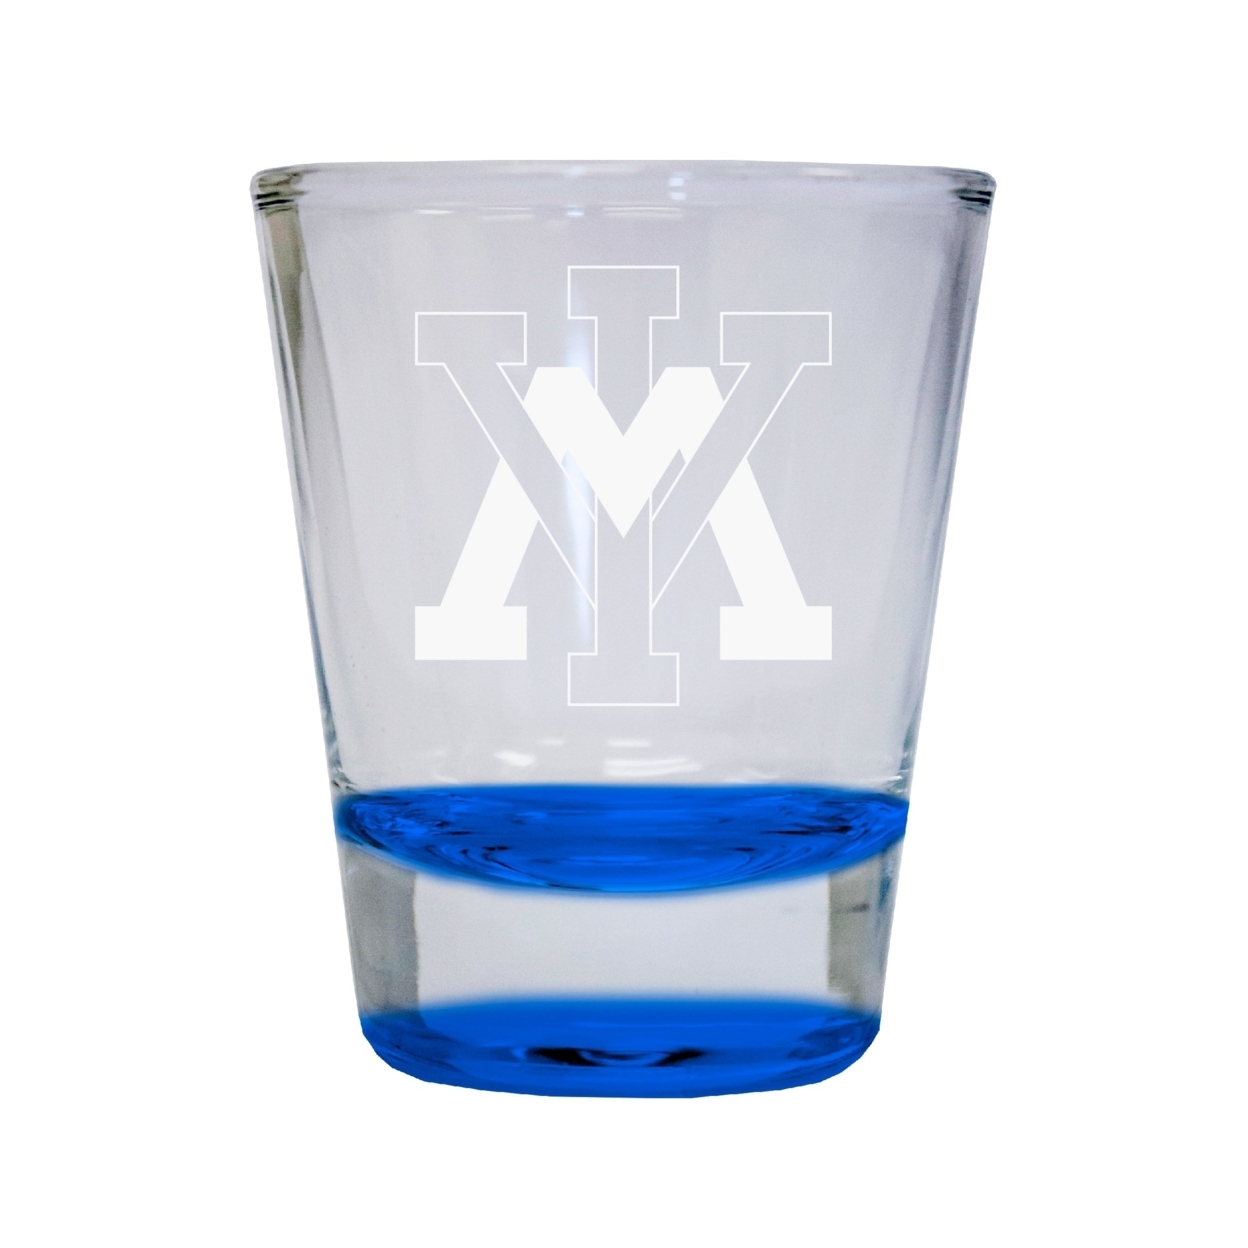 VMI Keydets Etched Round Shot Glass 2 Oz Blue